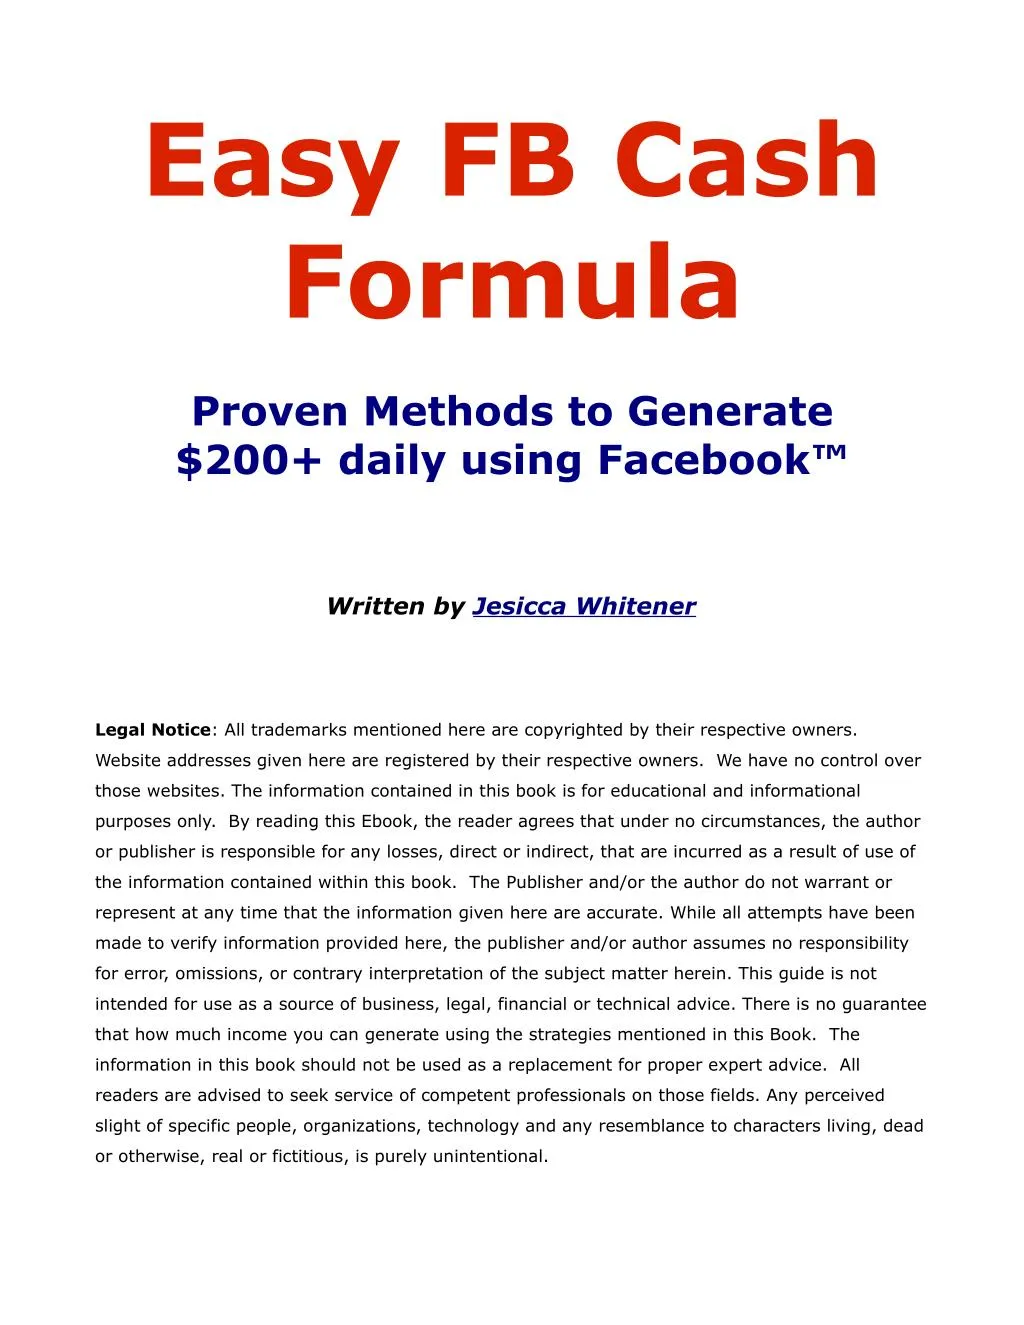 easy fb cash formula